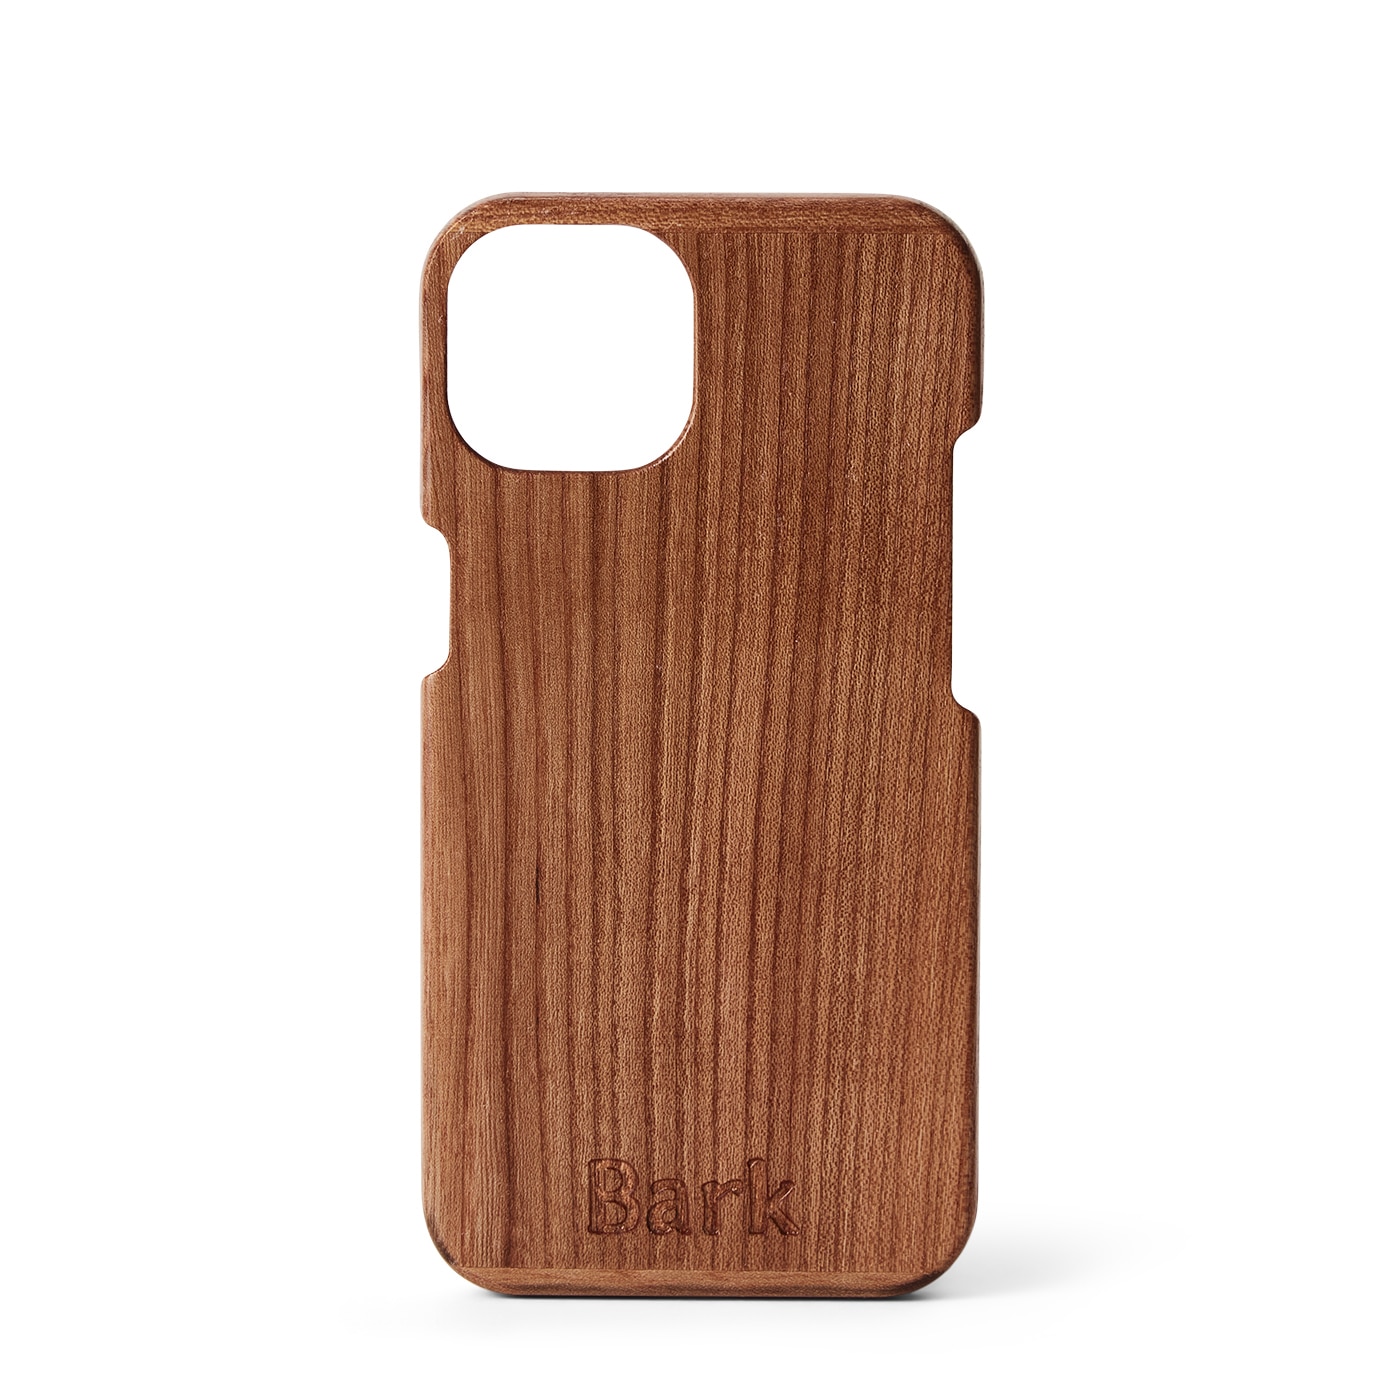 iPhone 13 case made of Swedish hardwood - Alm